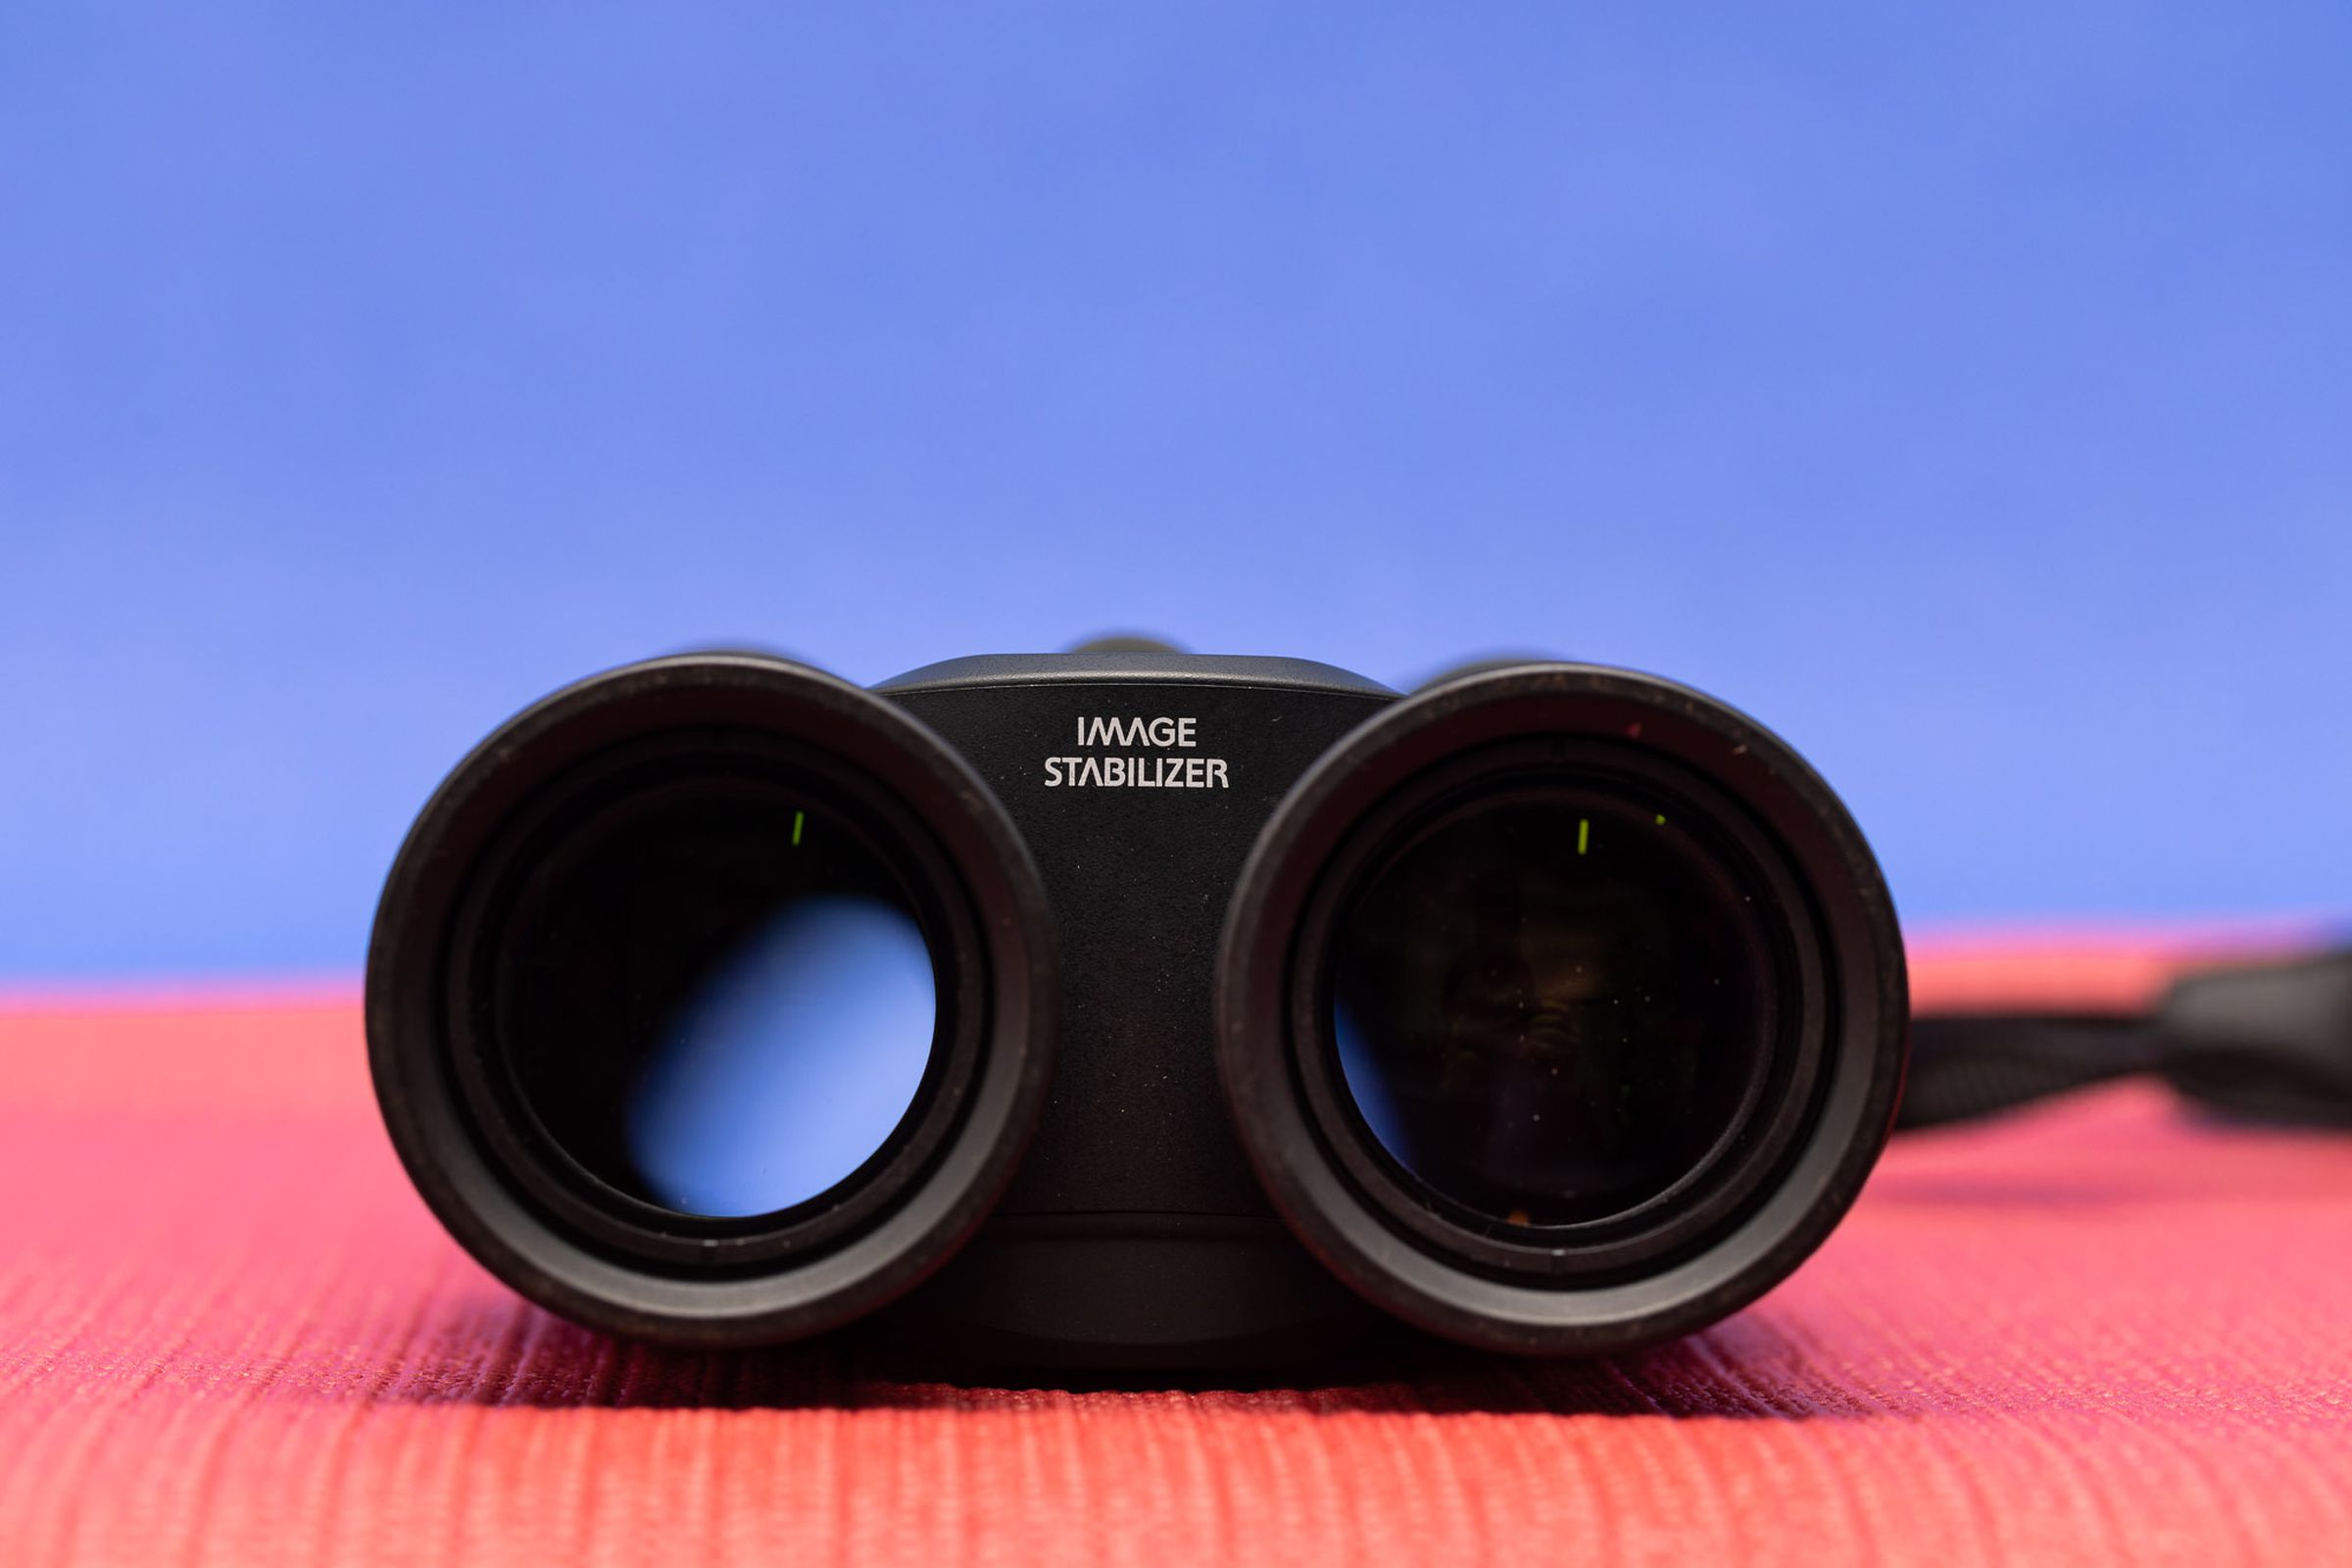 binoculars, looking through the front lenses